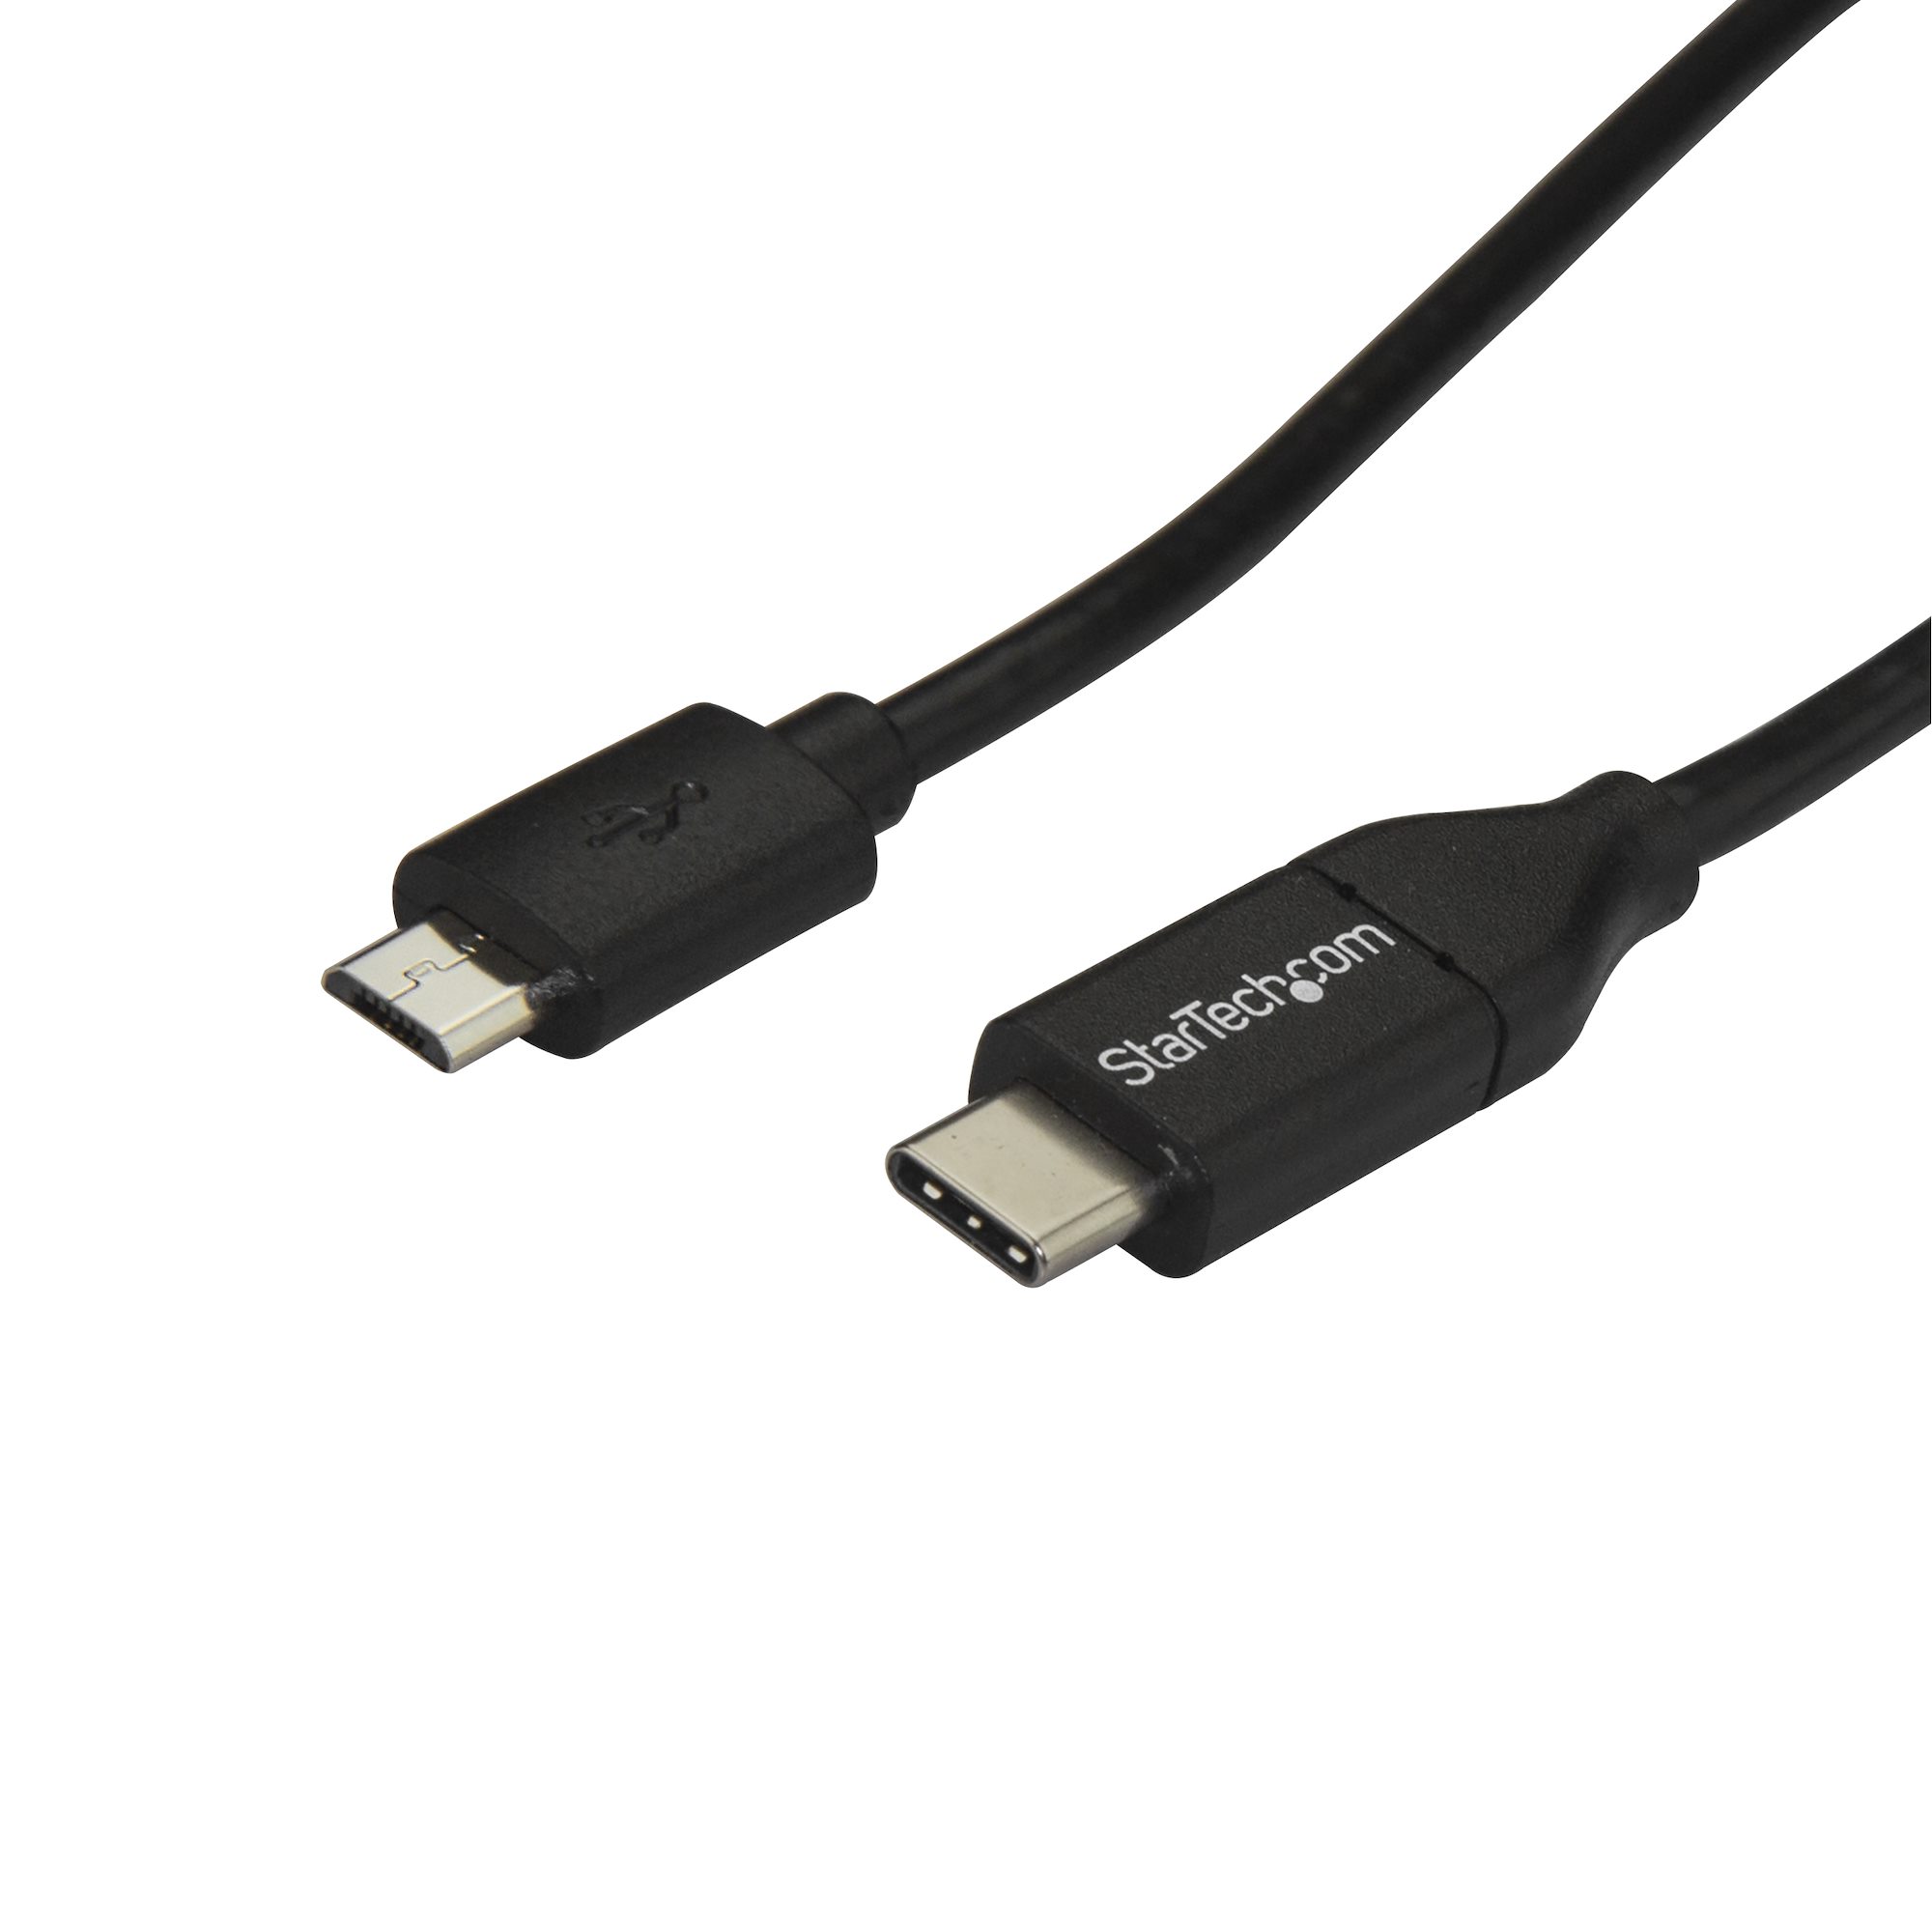 Ryd op klasse Uredelighed 1m USB C to Micro USB Cable - USB 2.0 - USB-C Cables | StarTech.com